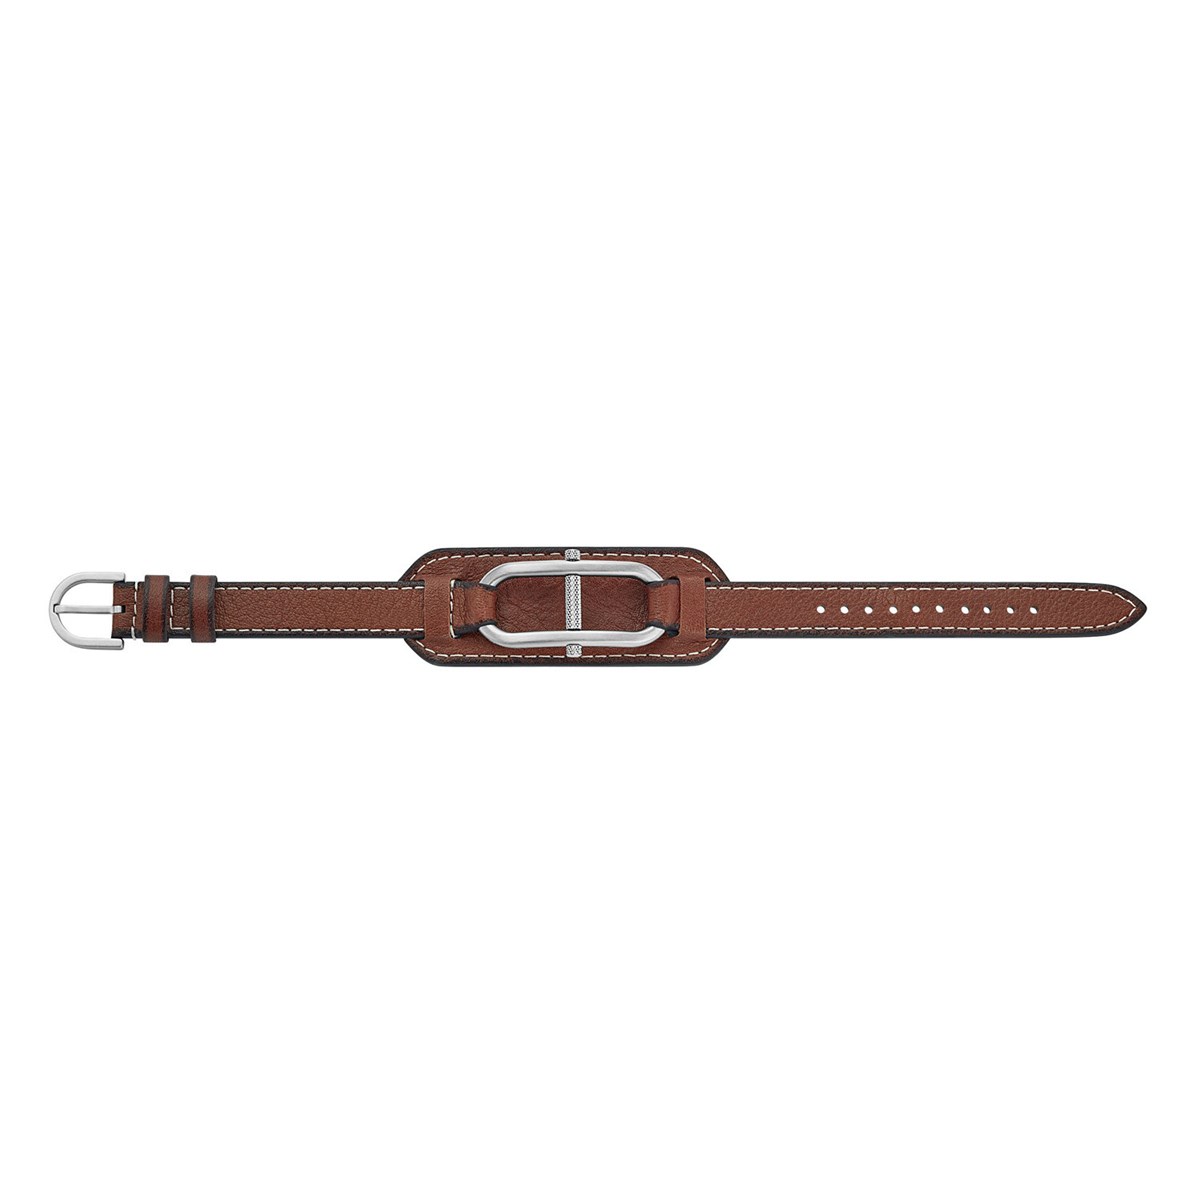 Bracelet homme Fossil Heritage D-Link cuir brun
motif ovale avec barette acier - vue 3